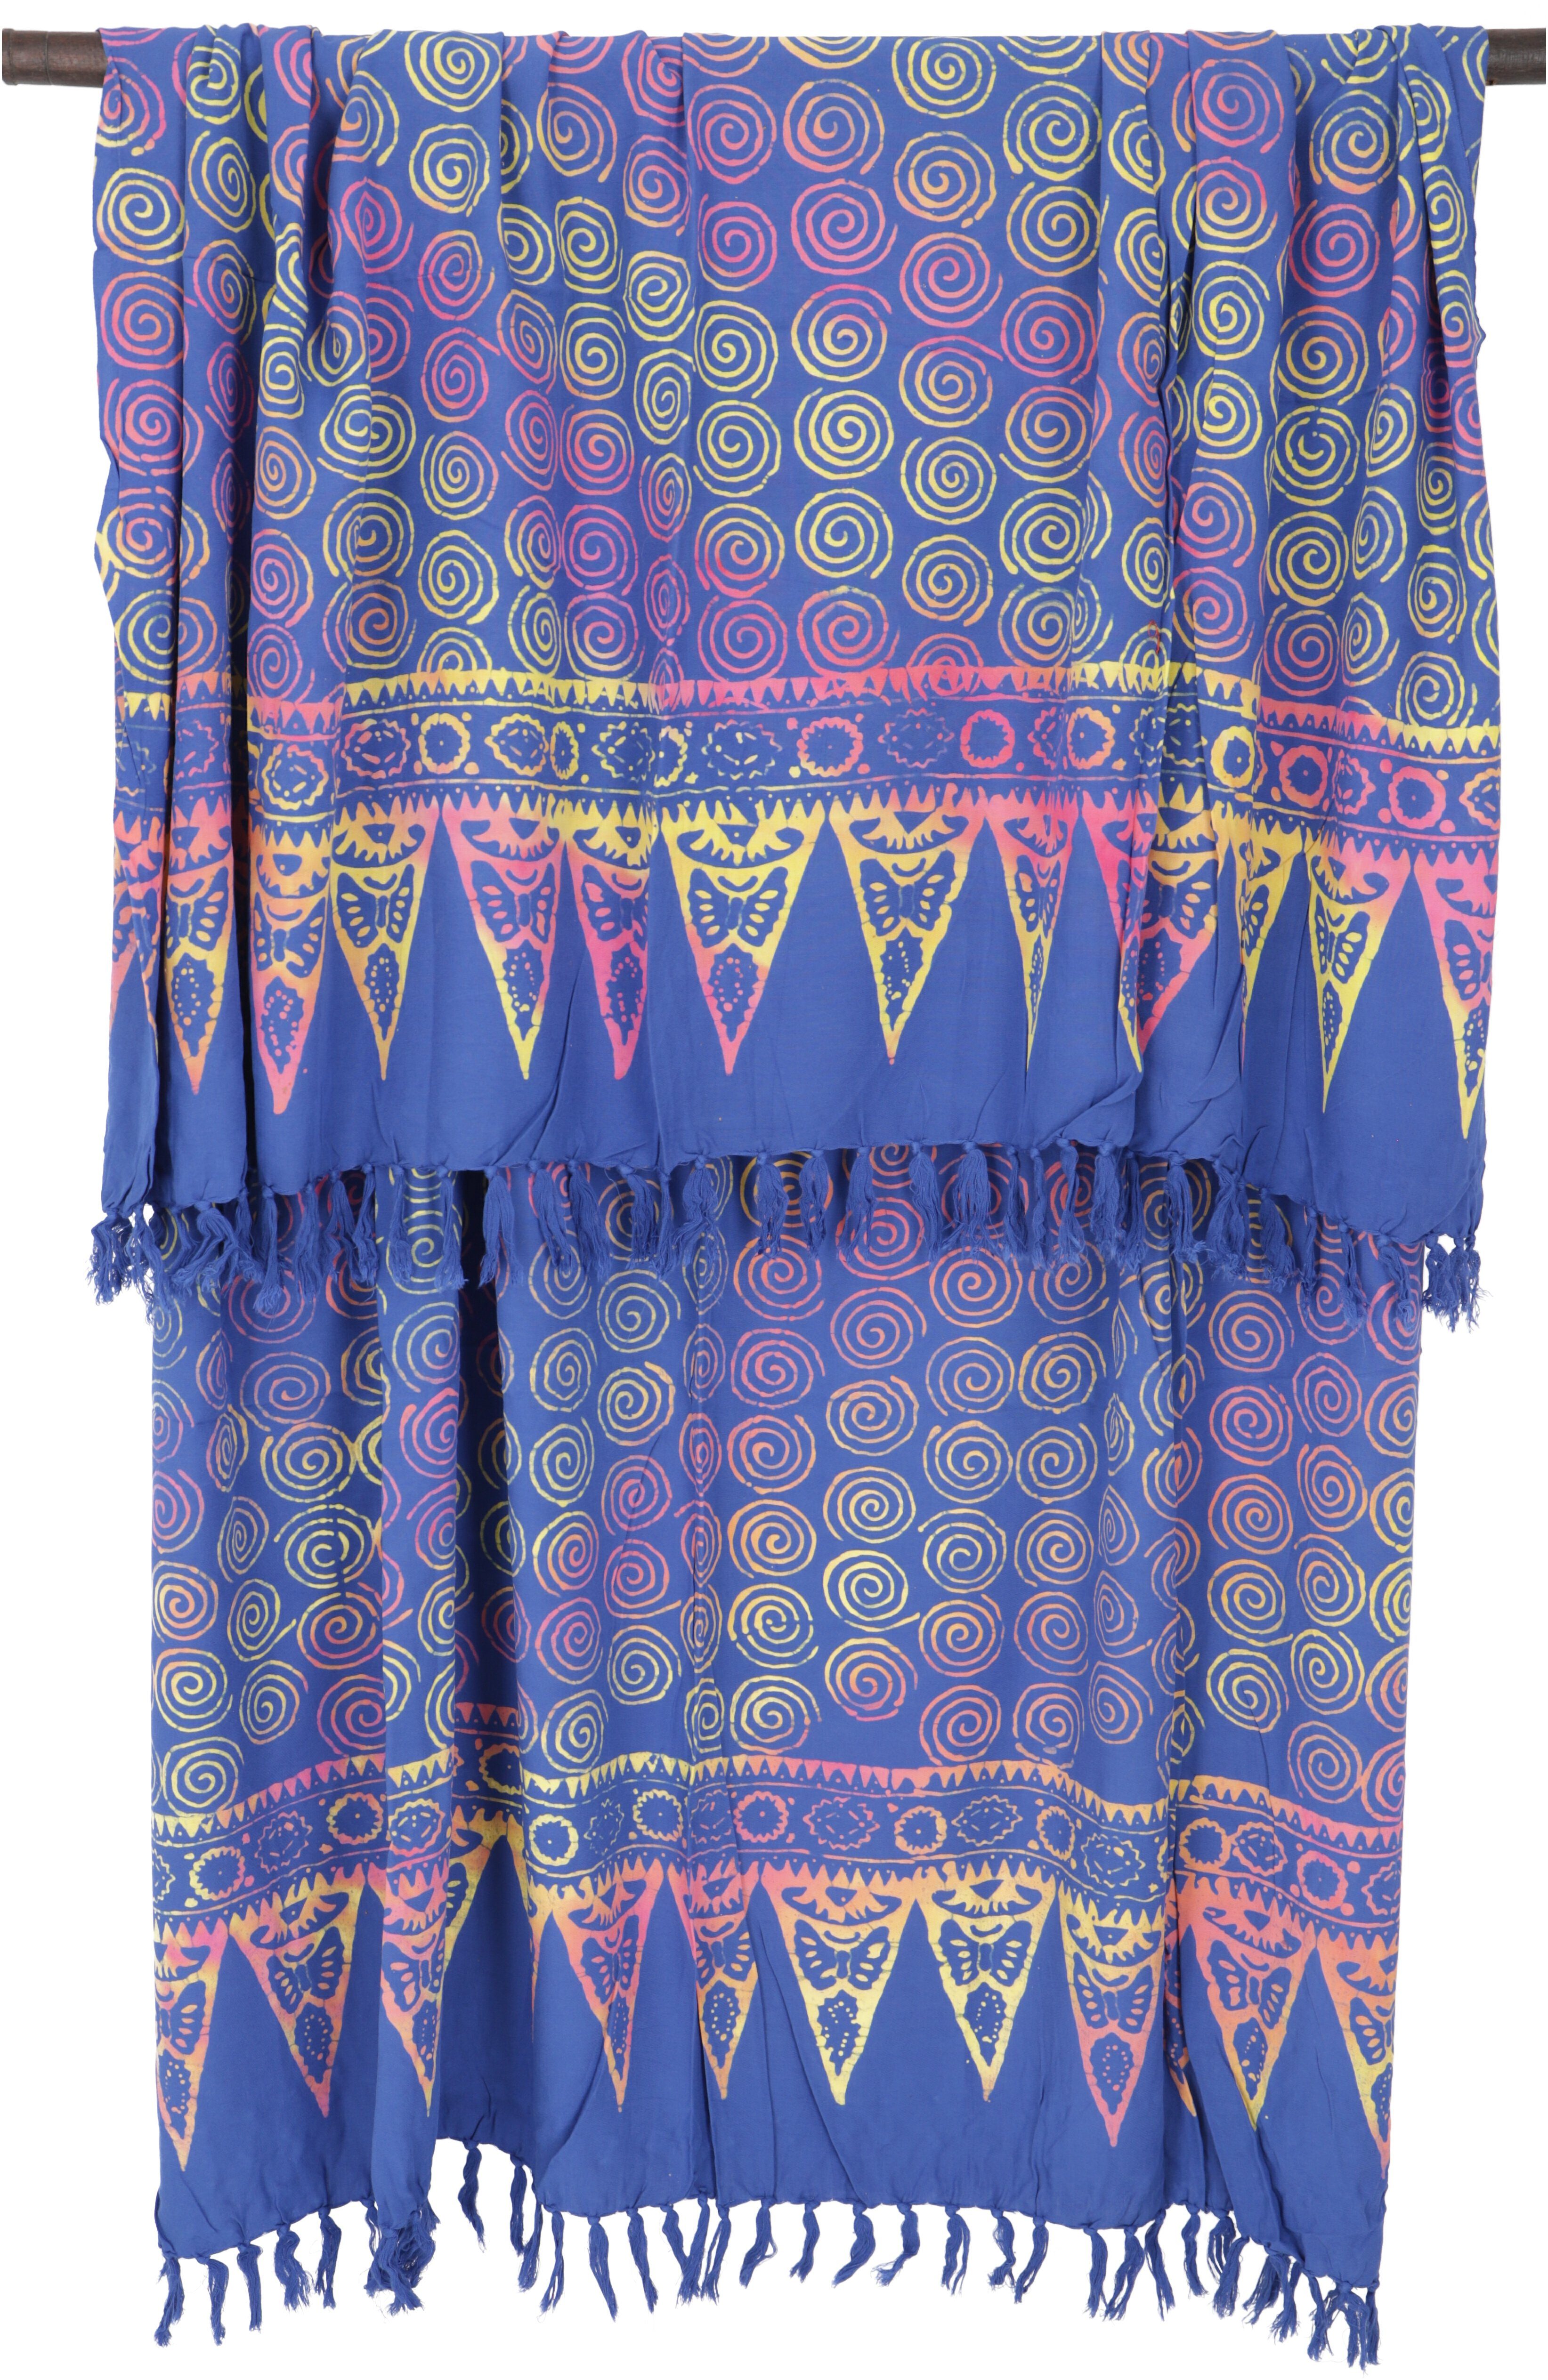 Guru-Shop Sarong Bali Batik 26/blau Wandbehang, Design Sarong, Wickelrock